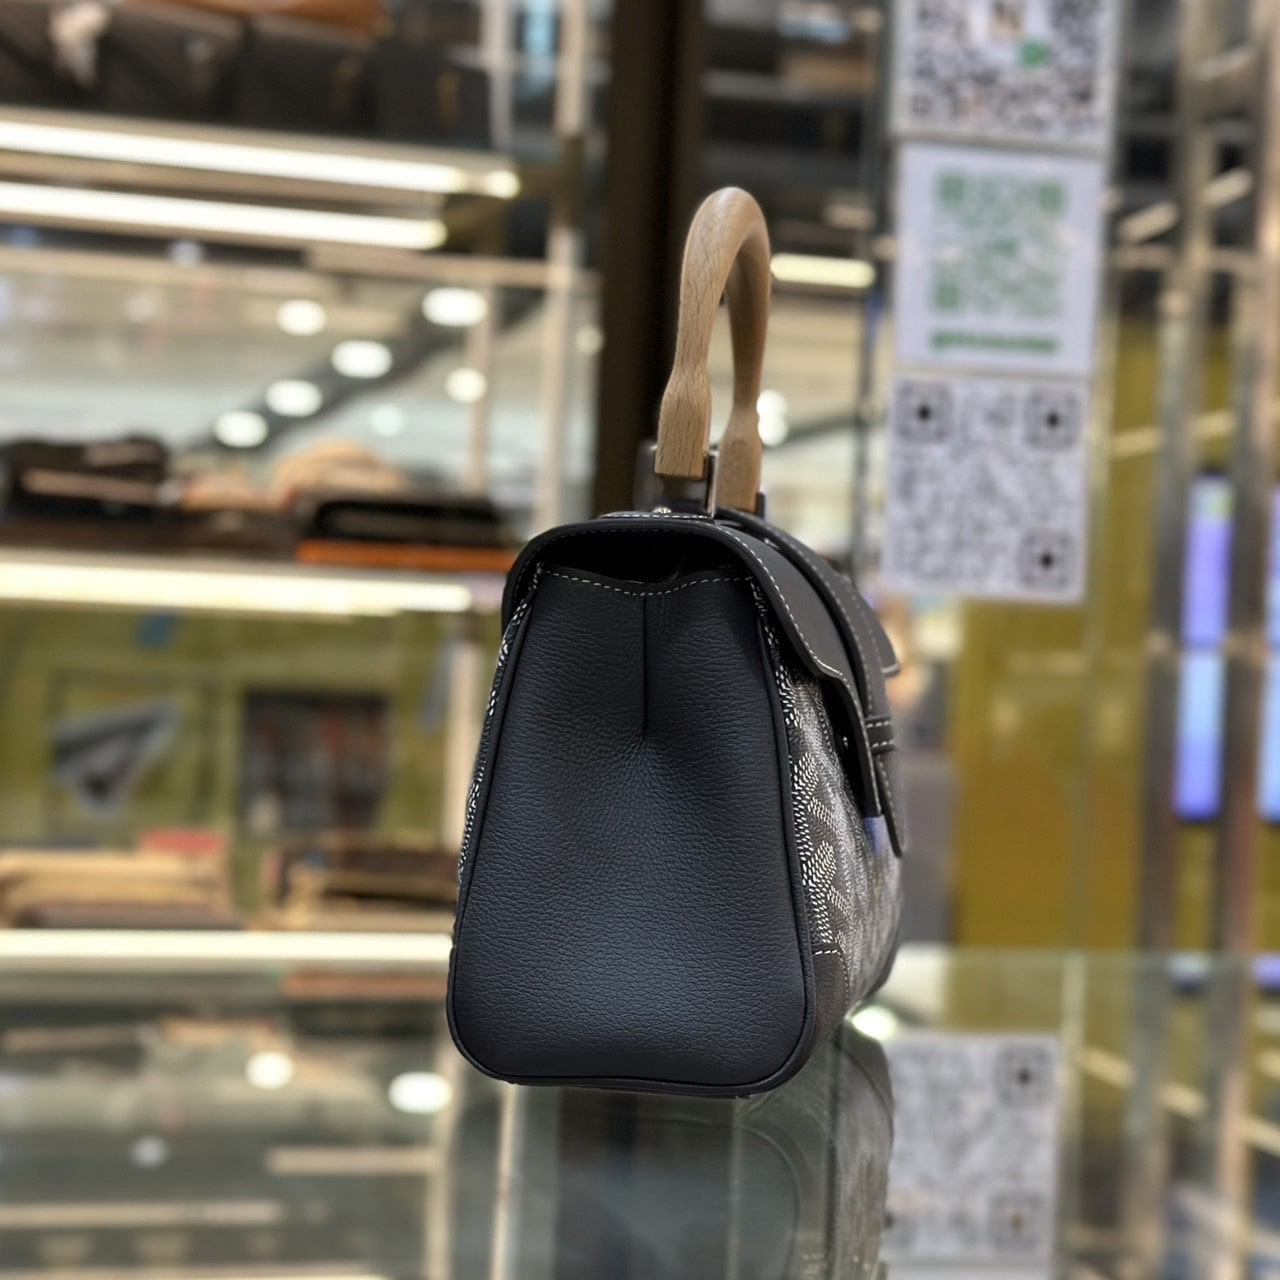 GOYARD Saïgon Souple Mini Bag - Madame N Luxury